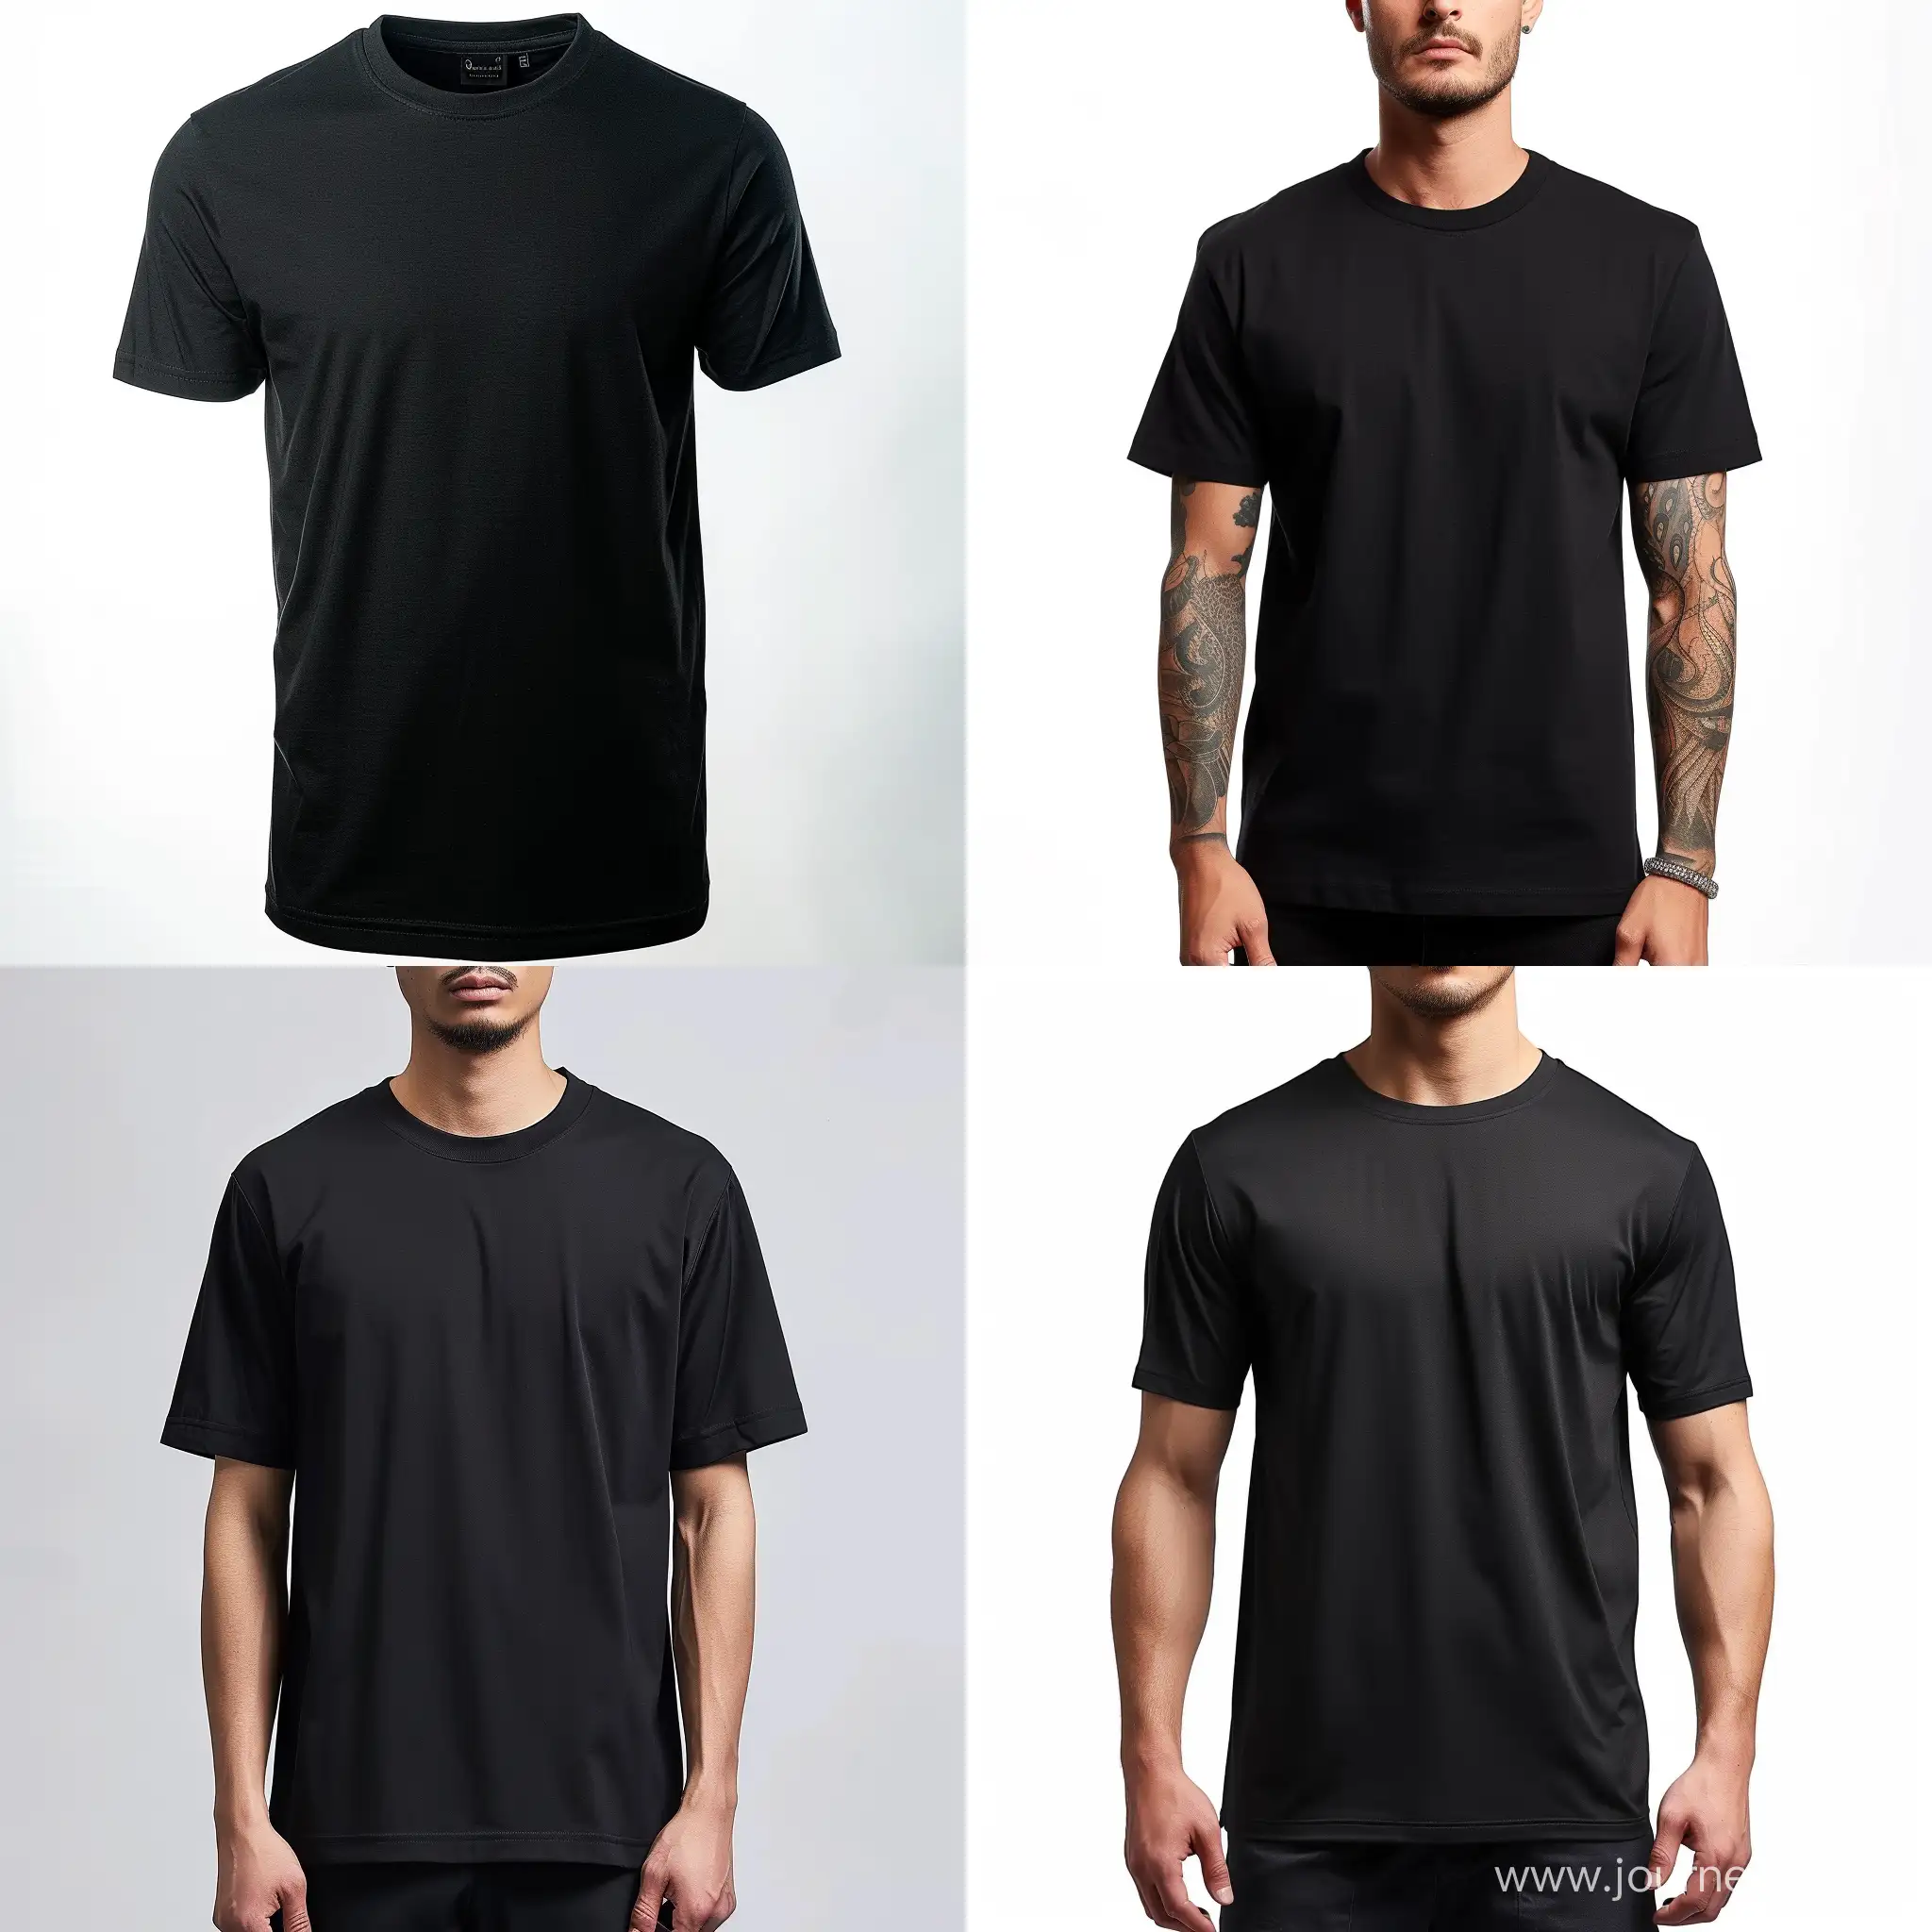 Qianying Custom Tshirt Glow In The Dark Men Streetwear Reflective black T-Shirt product photo in white background